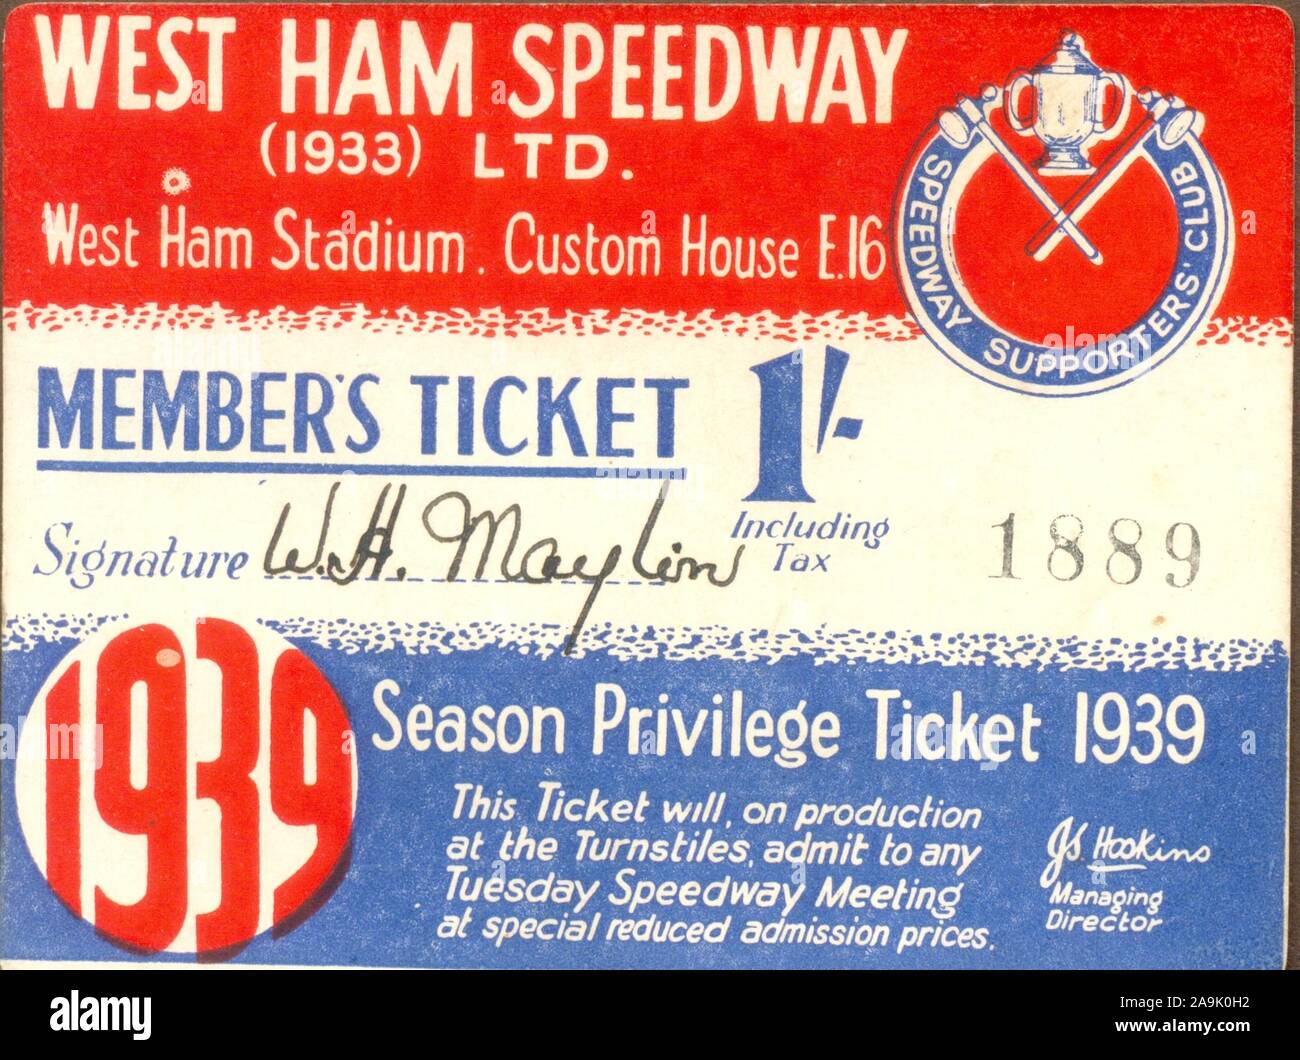 Temporada 1939 Privilegio Ticket para el West Ham Speedway, Custom House, Londres E 16 Foto de stock